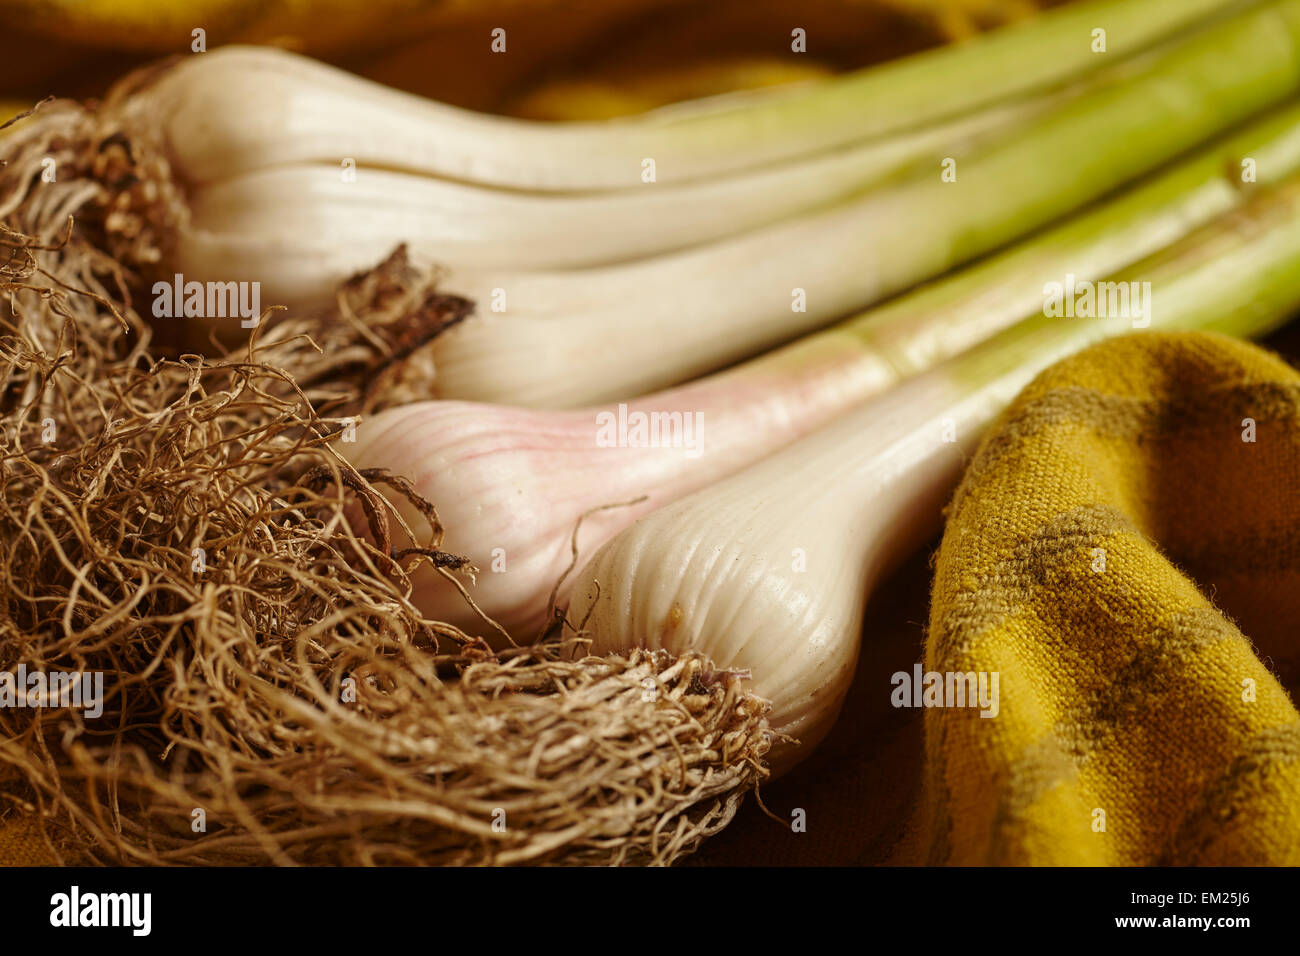 fresh young garlic stalks Stock Photo